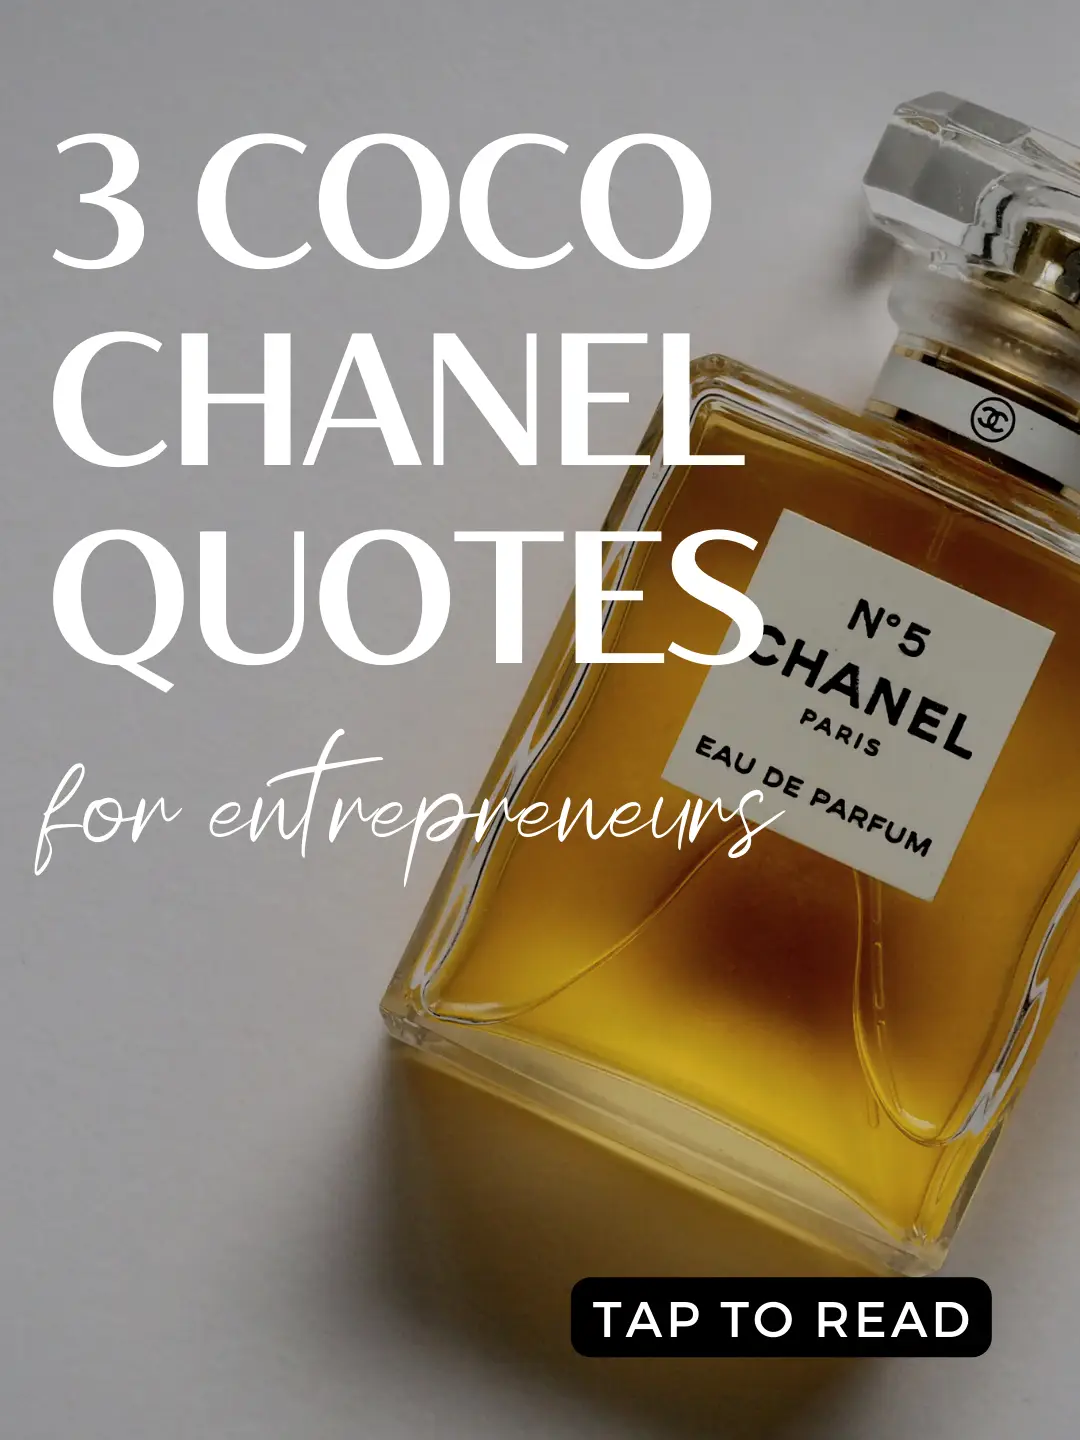 Coco Chanel inspirational entrepreneur